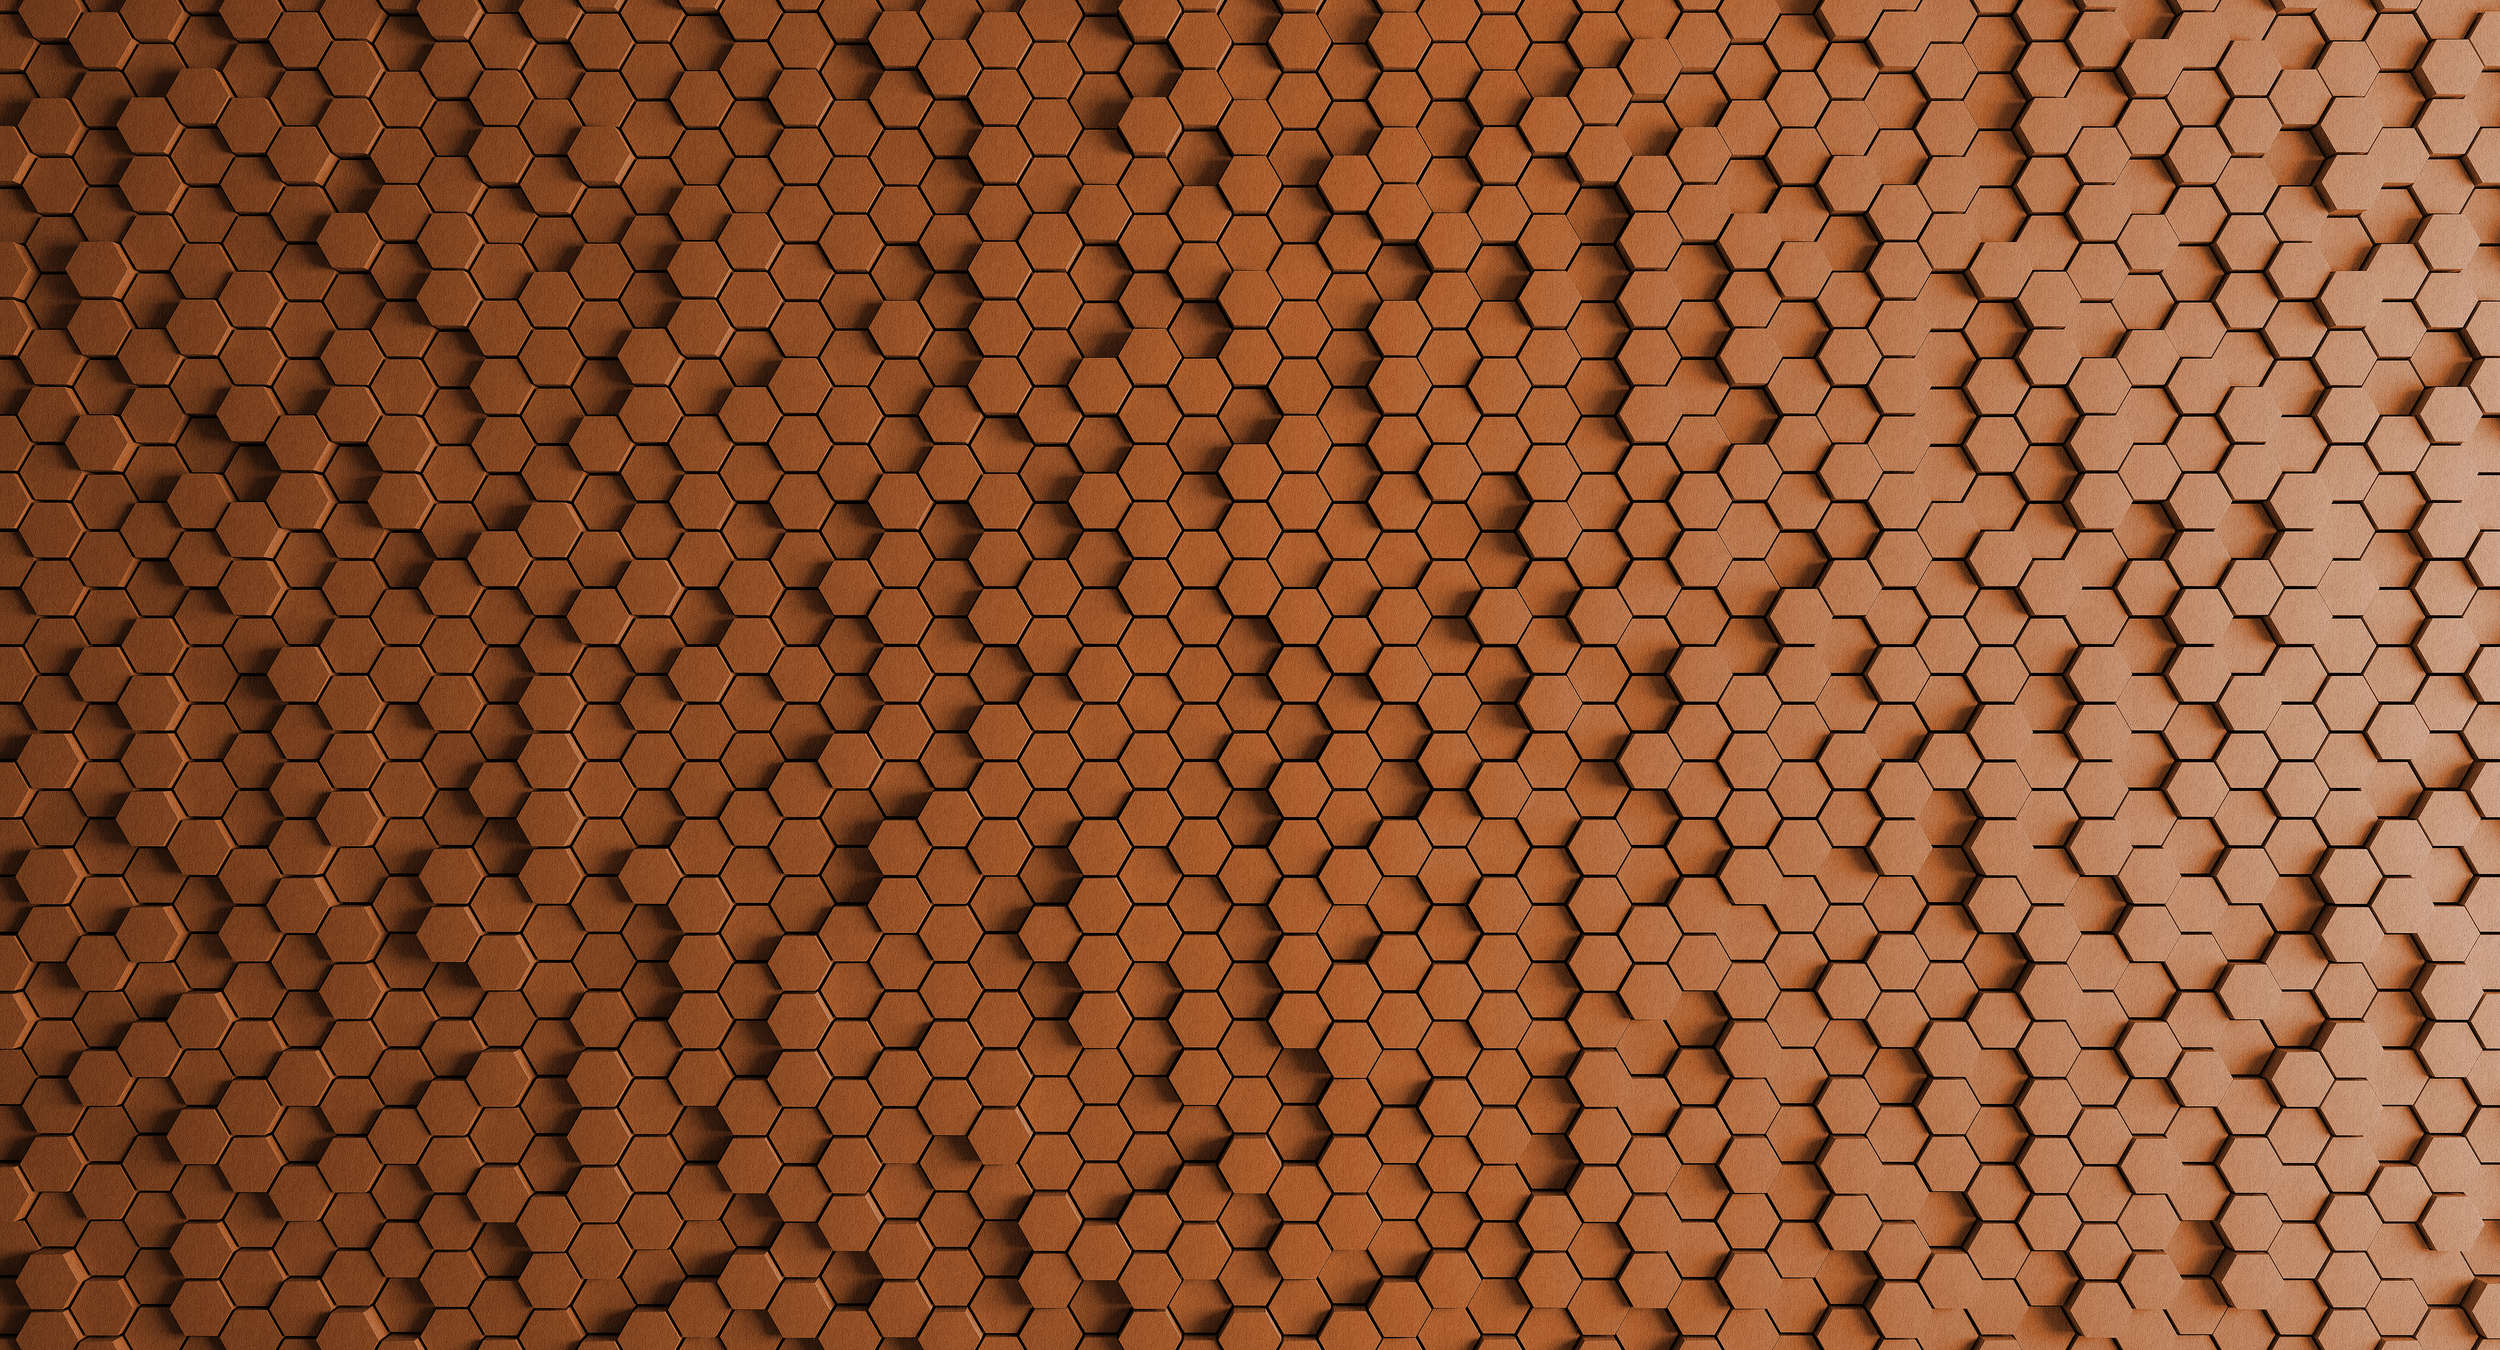             Honeycomb 2 - 3D Fototapete mit orangenem Wabendesign - Struktur Filz – Kupfer, Orange | Mattes Glattvlies
        